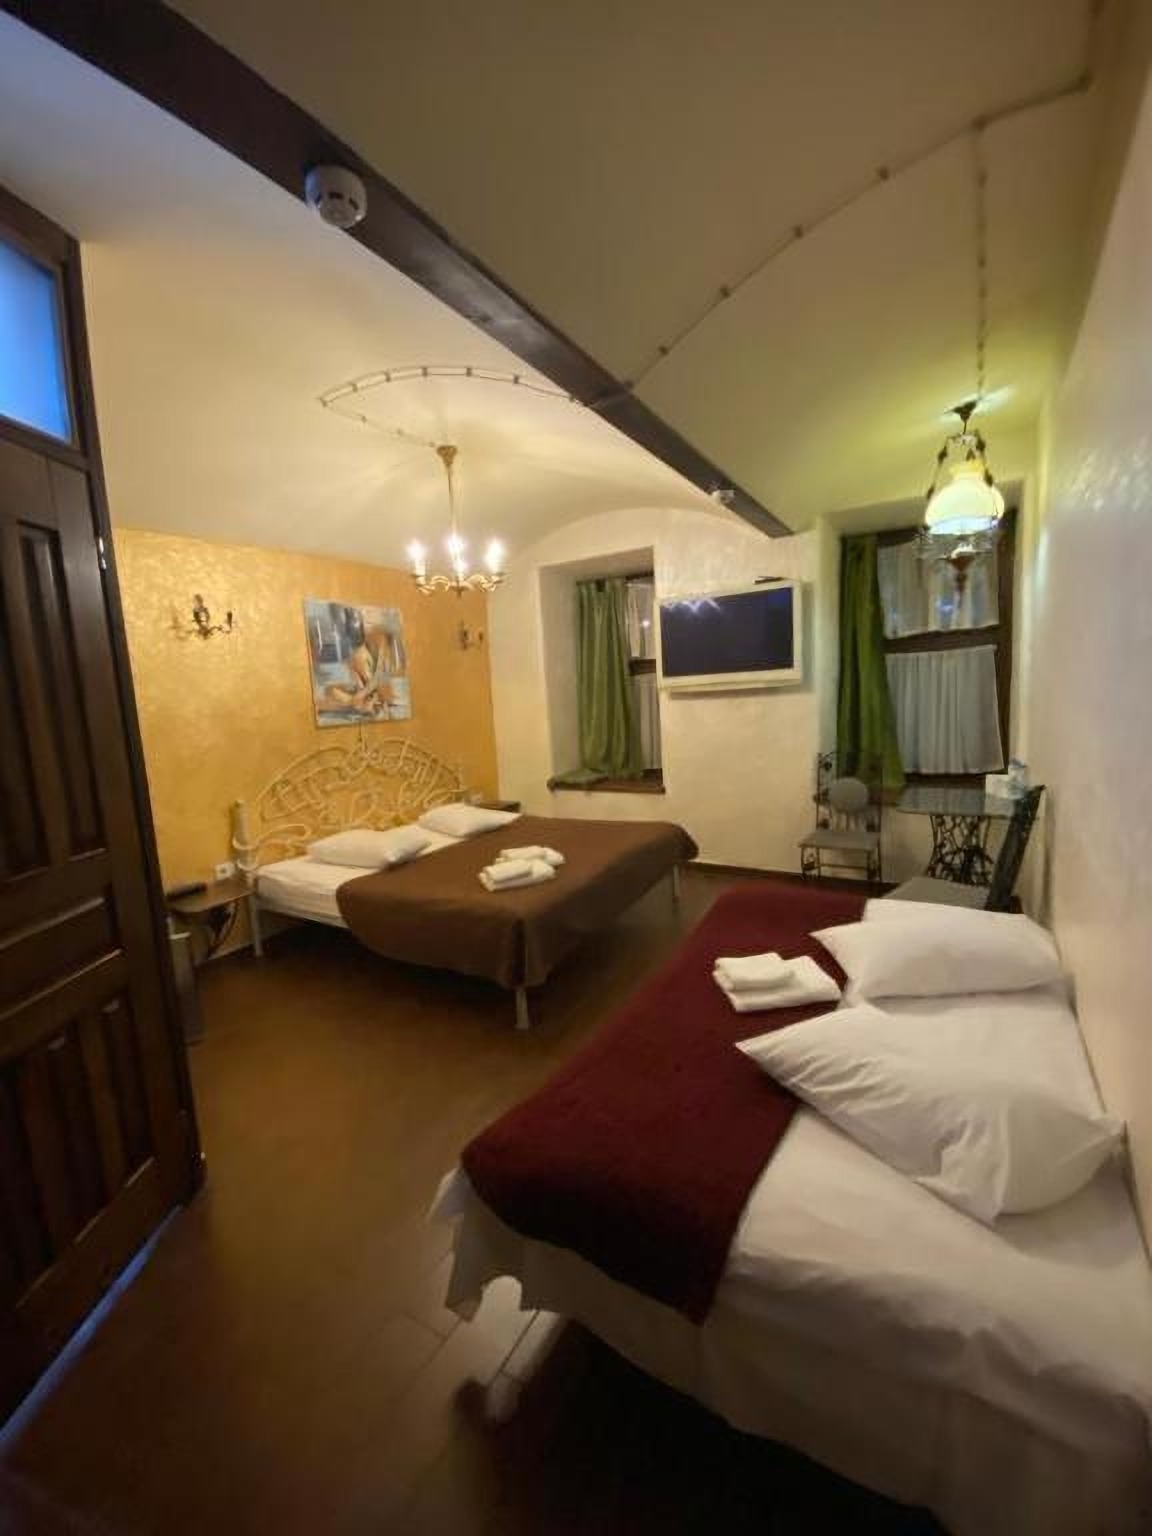 Quadruple room at the Old Krakow Hotel in Lviv Ukraine